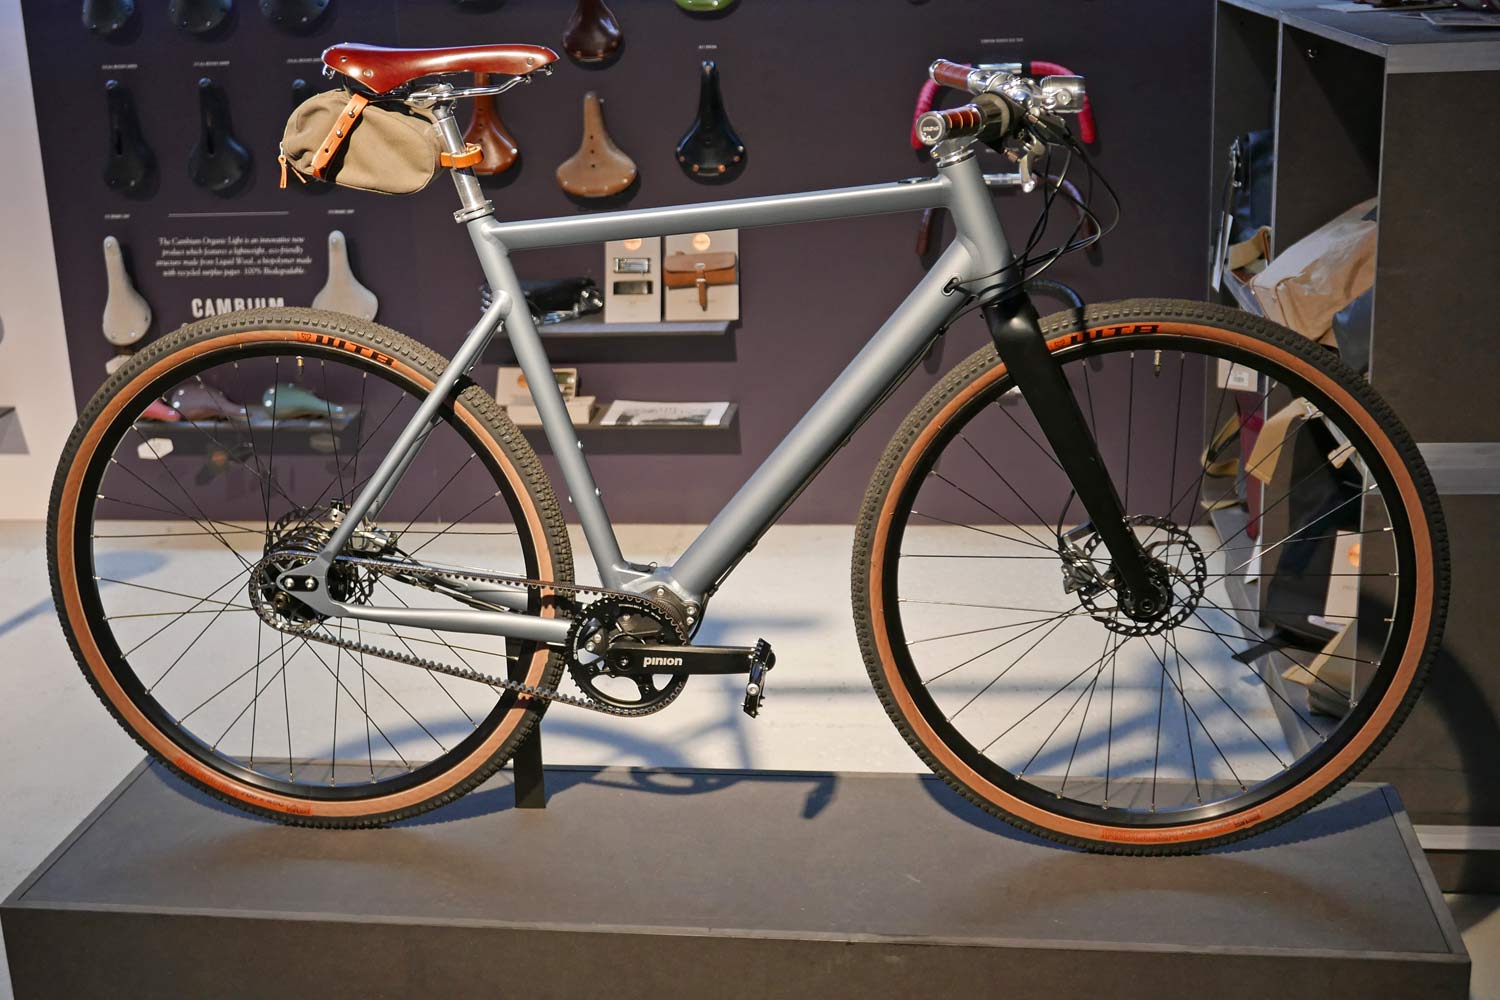 Desiknio Pinion Urban ebike, sleek urban commuter e-bike with integrated battery hub motor and gearbox